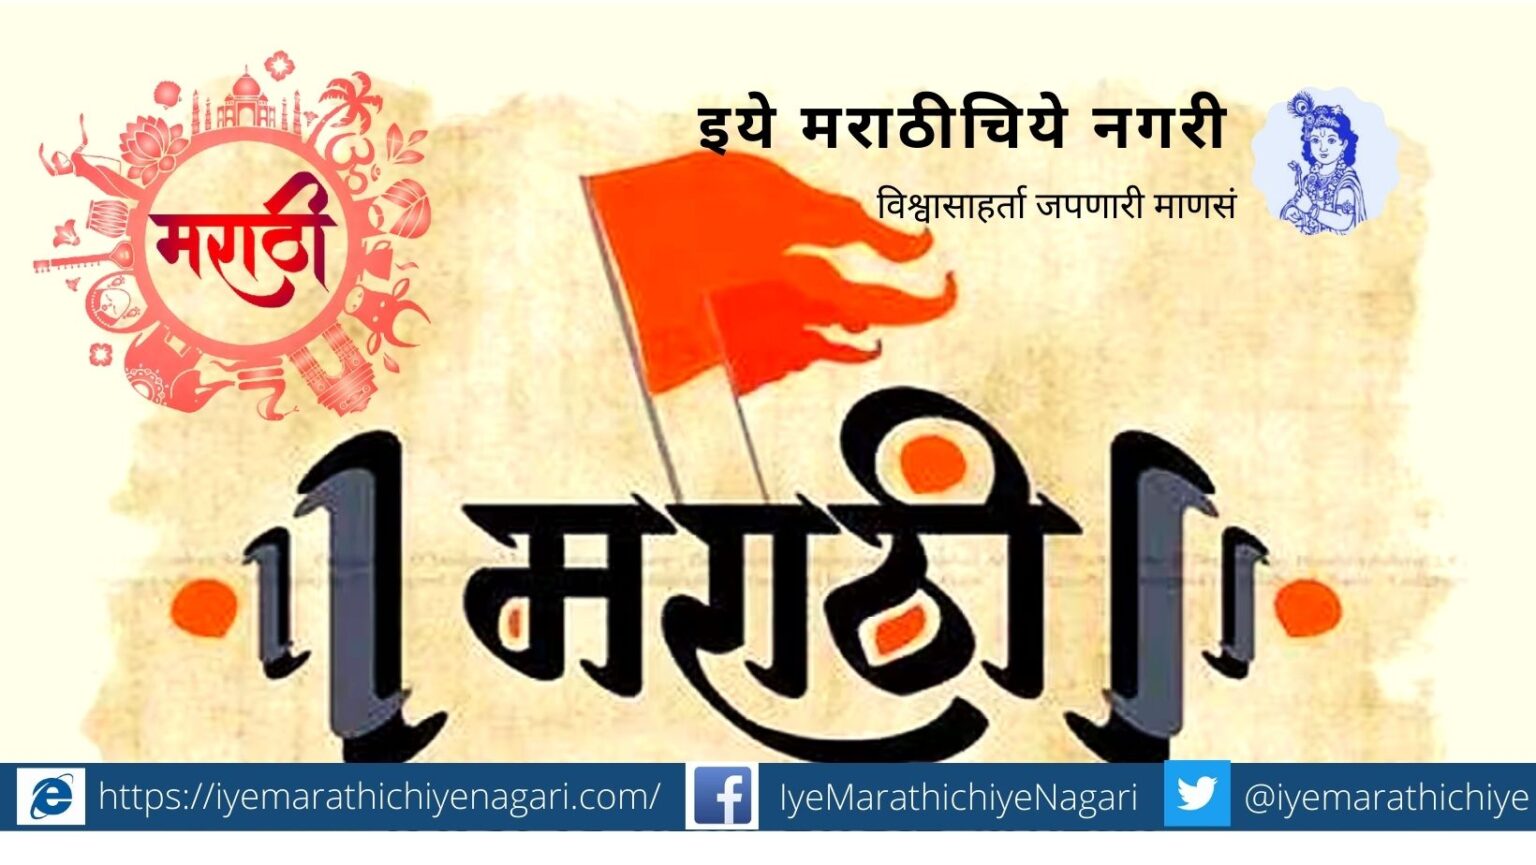 Movement for Marathi Abhjijat